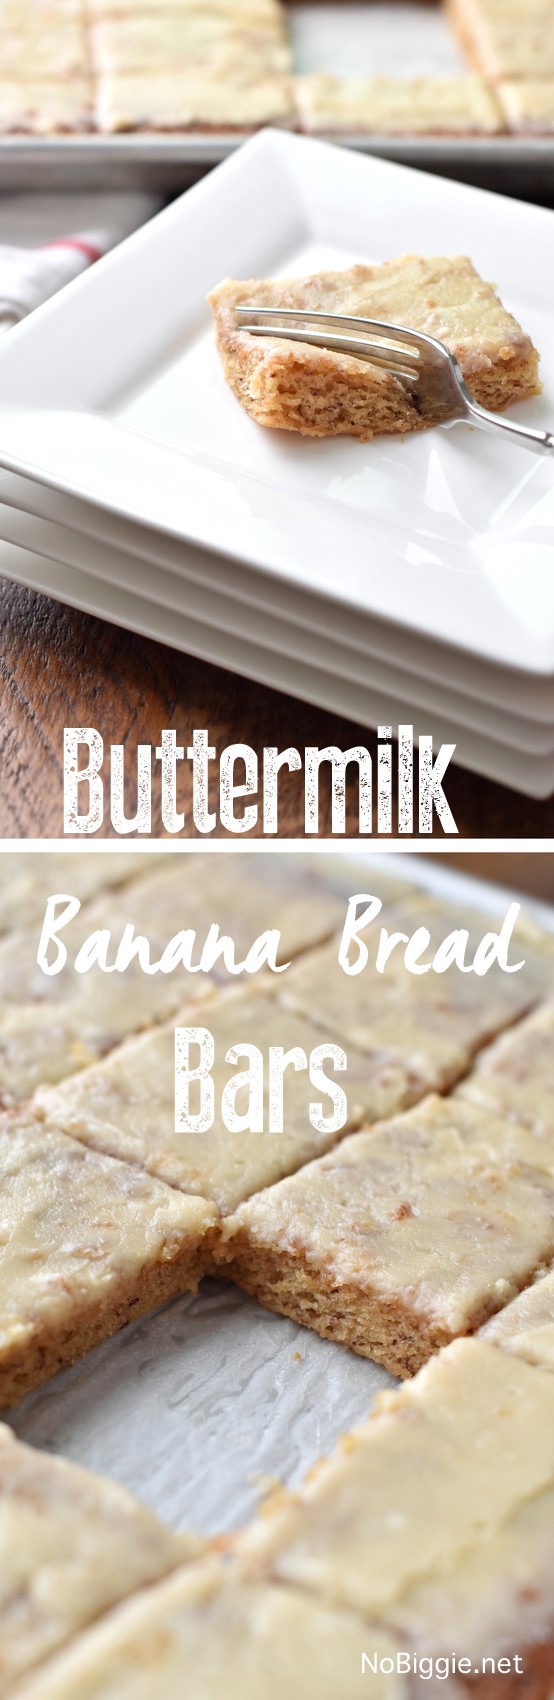 buttermilk banana bread bars | NoBiggie.net